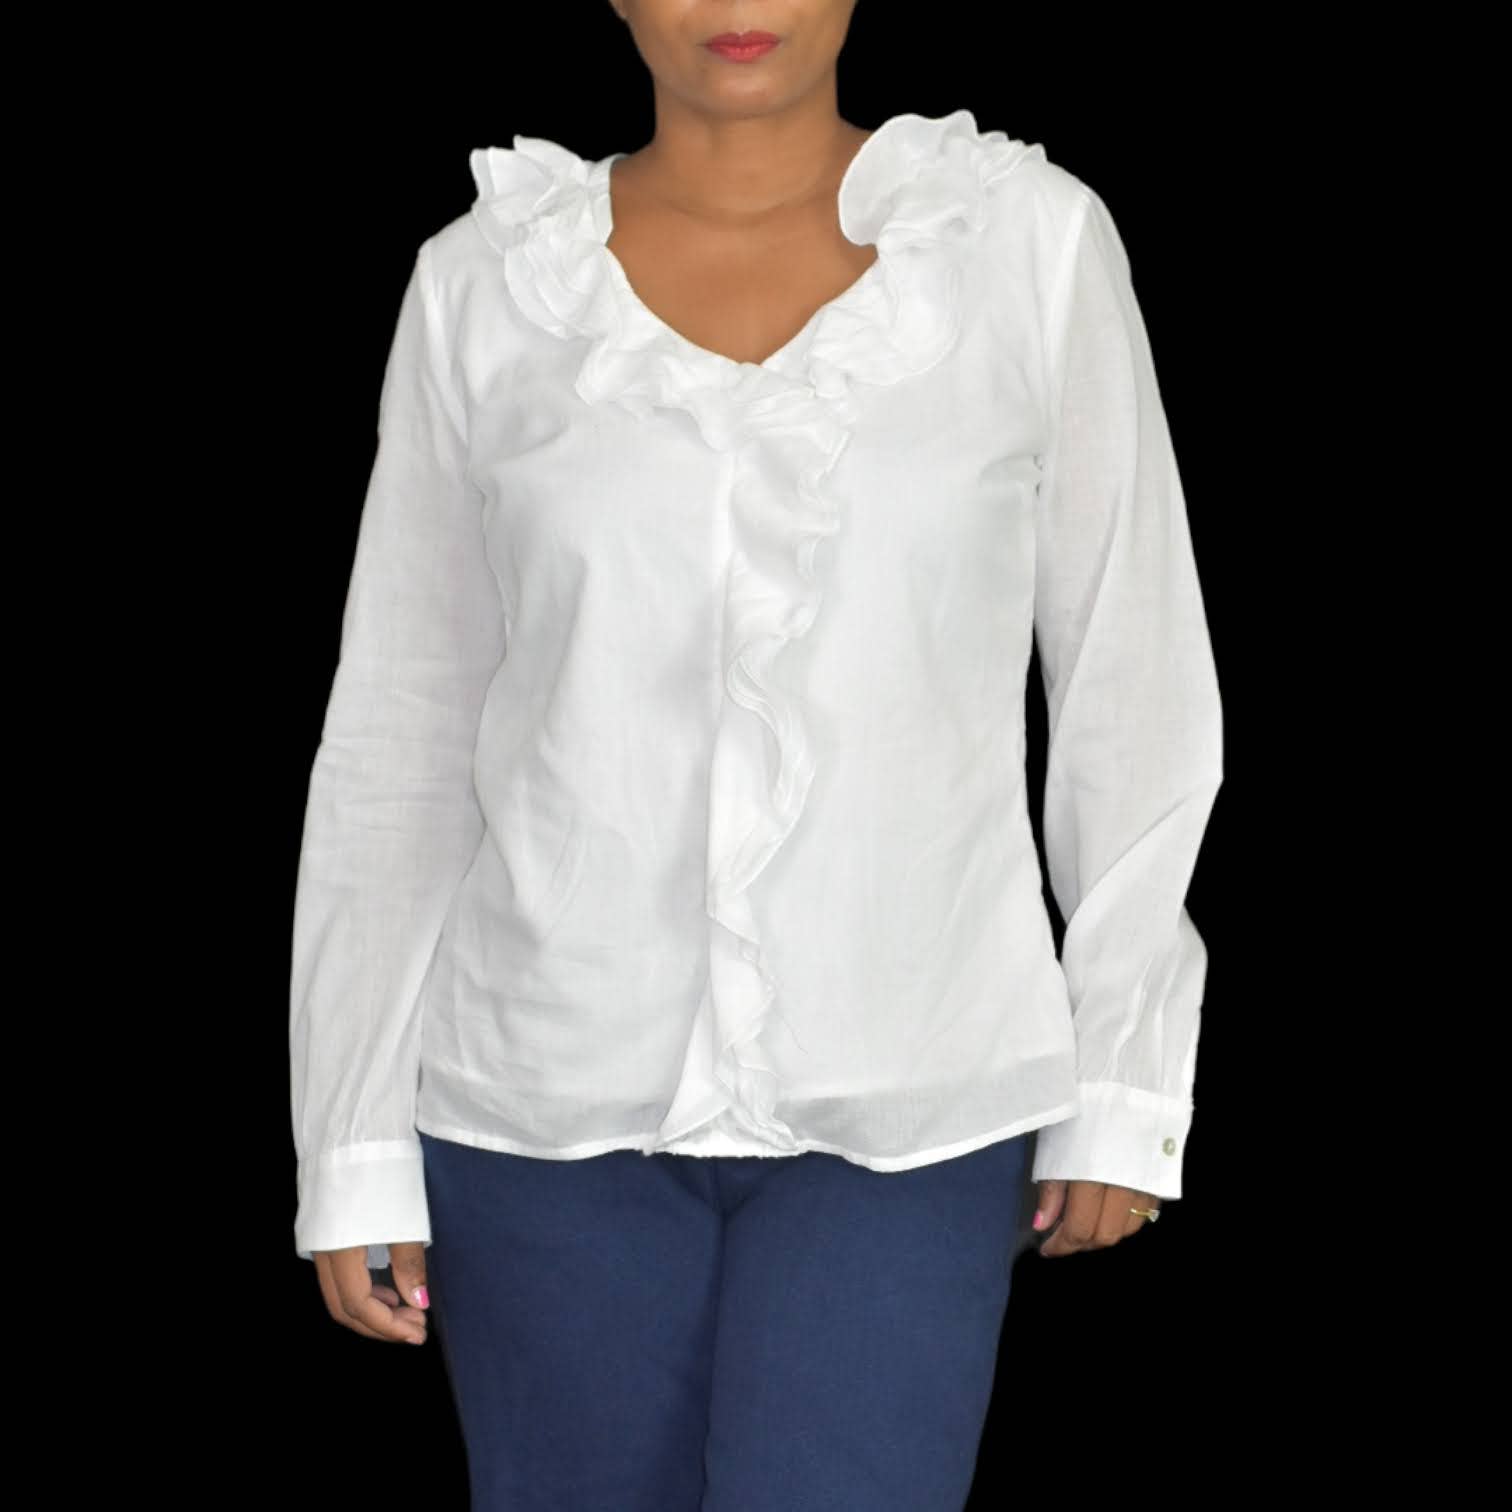 J Peterman White Ruffle Blouse Shirt Button Front Cotton Long Sleeve Size Small